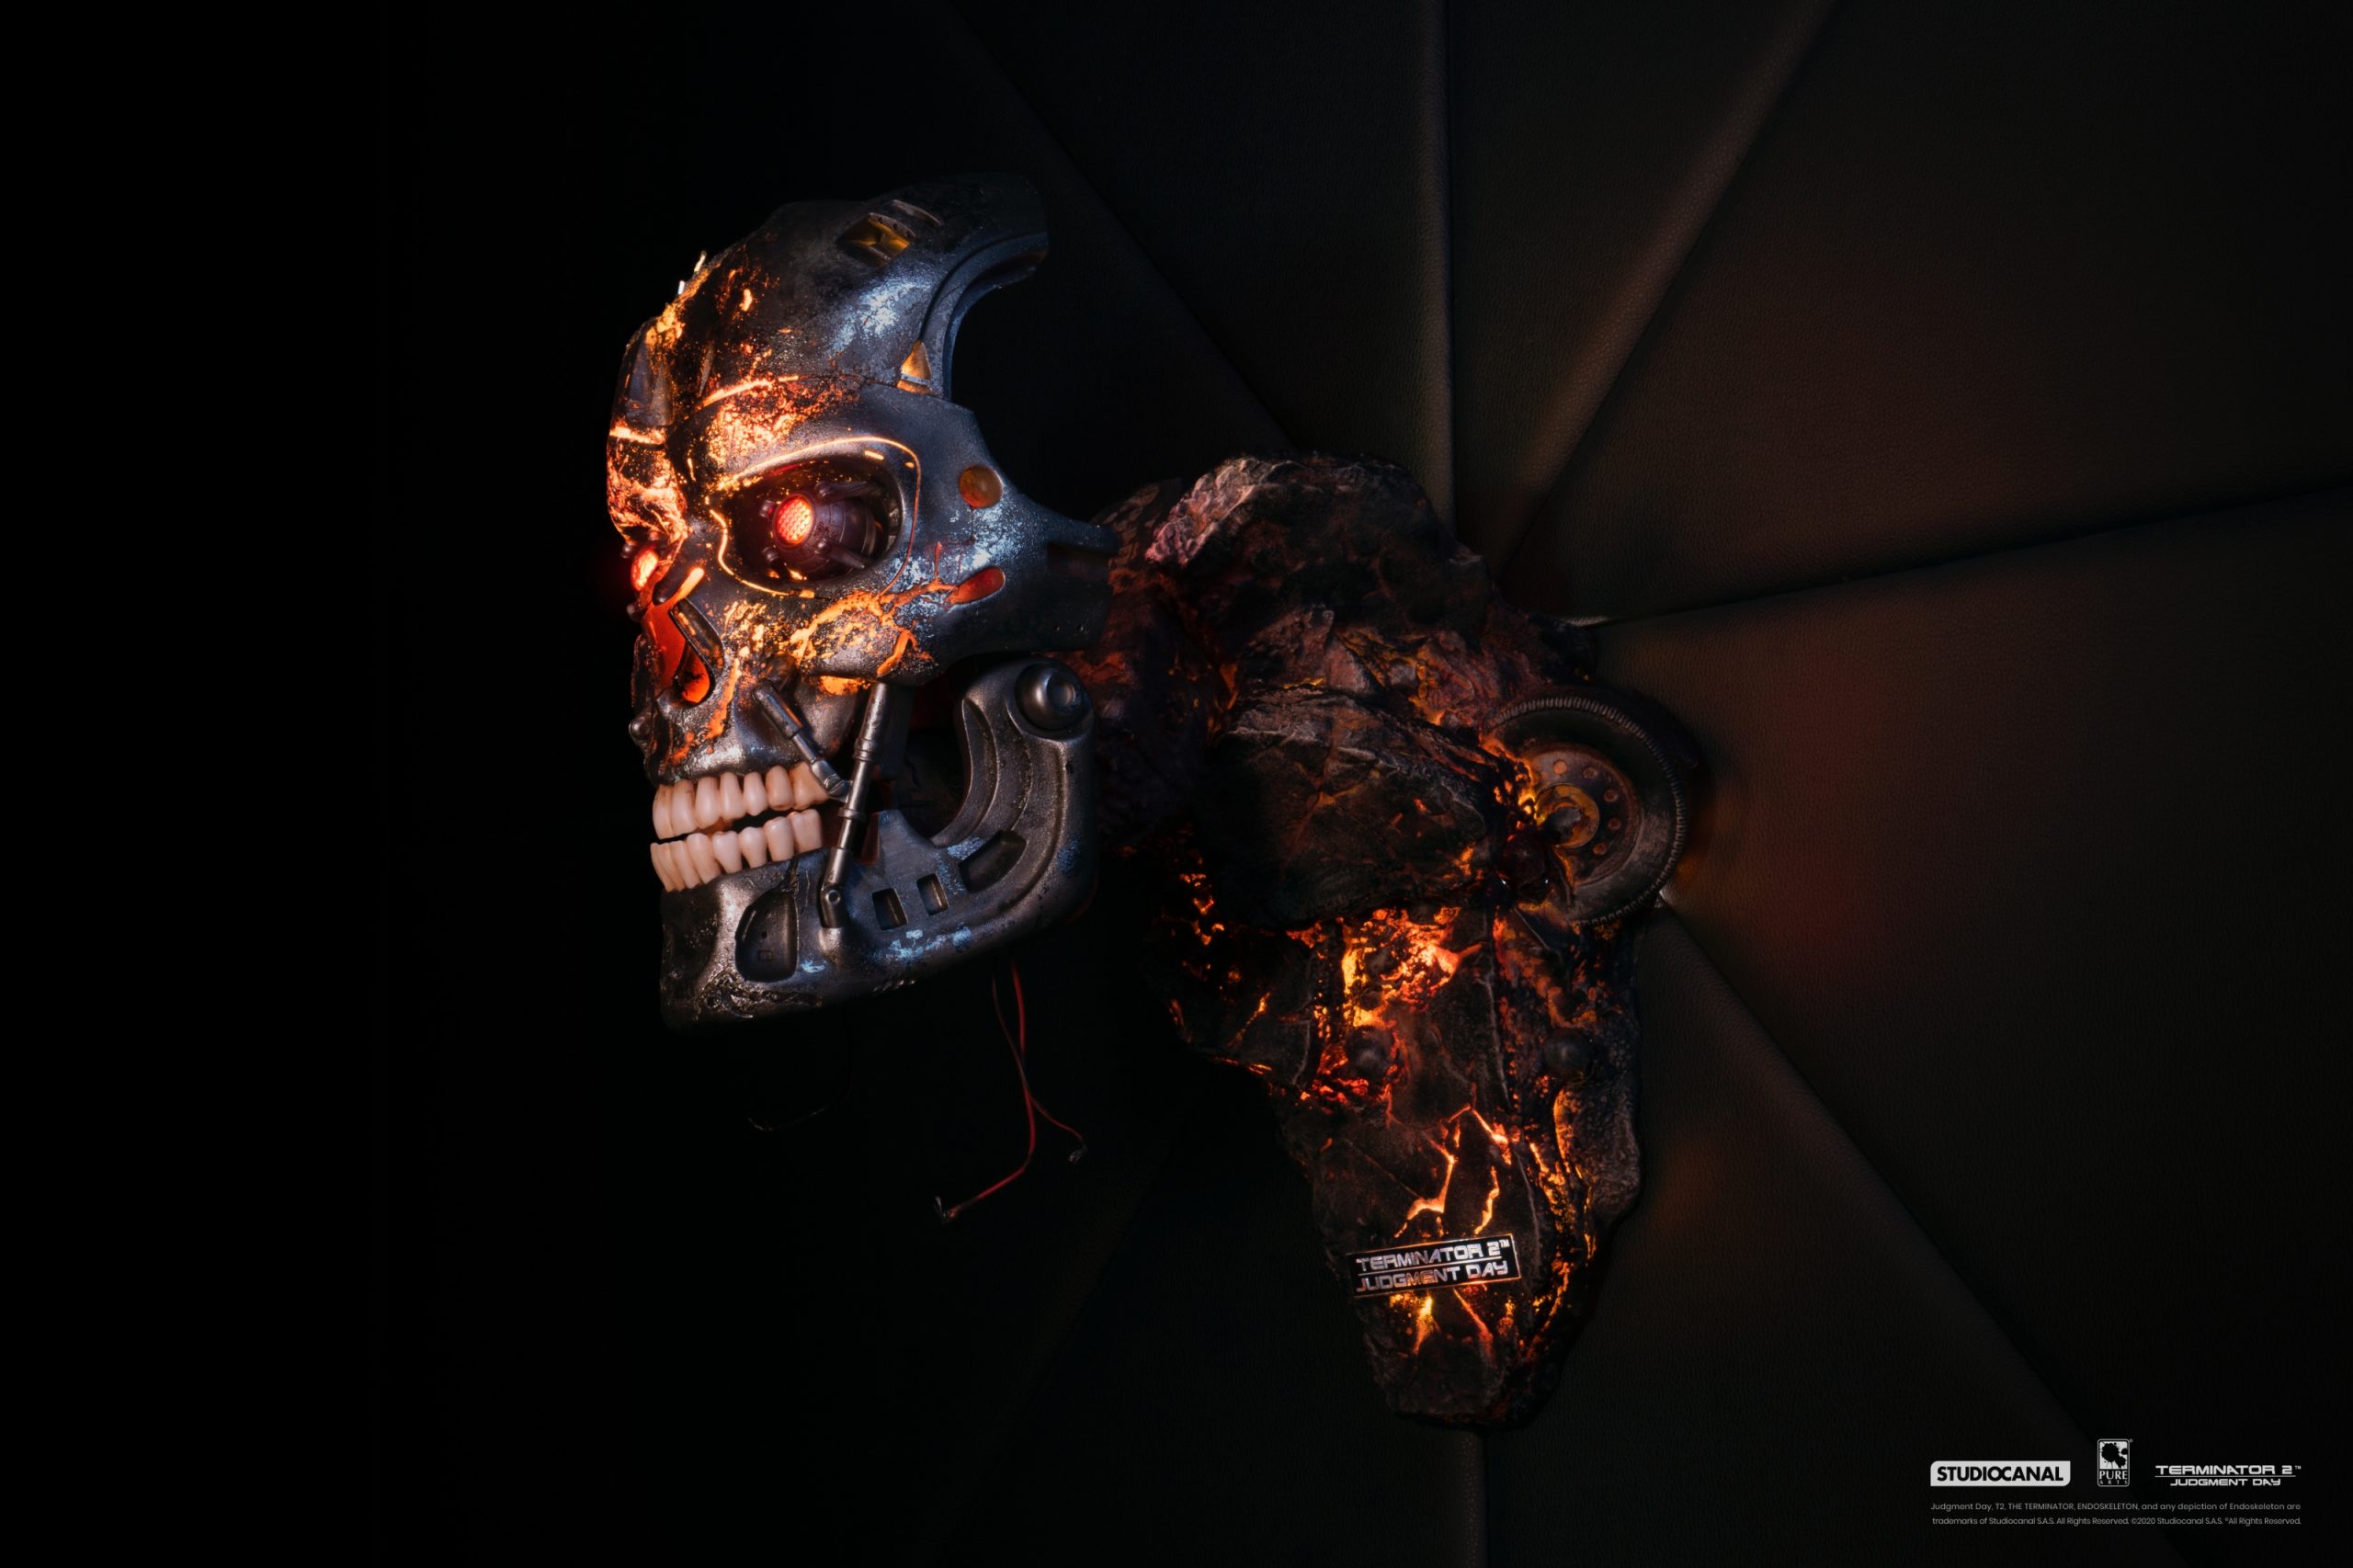 terminator 2 skull on fire